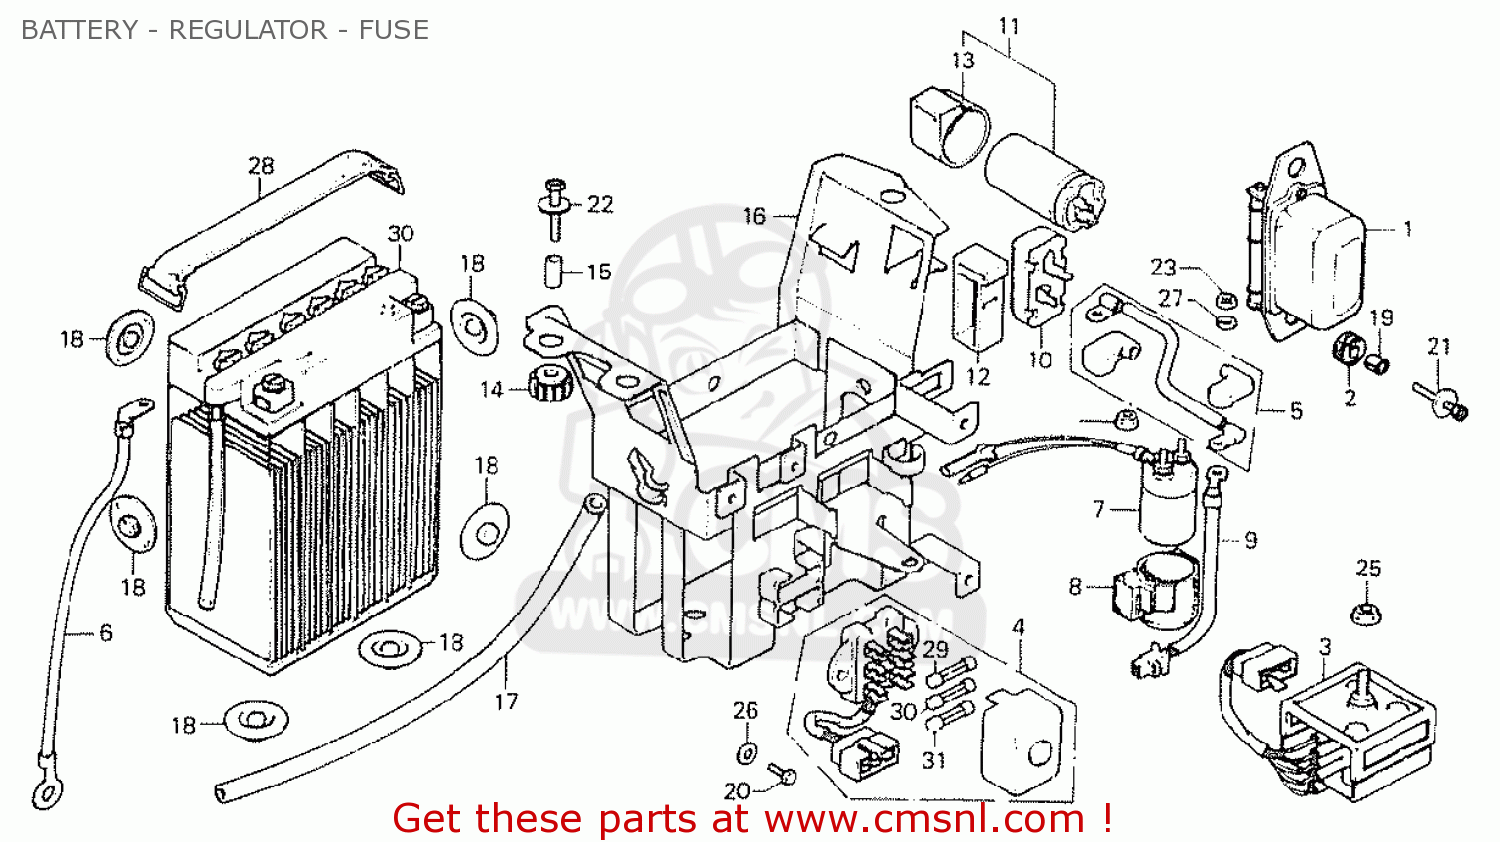 Honda Cb750k7 Four England Battery - Regulator - Fuse ... cb750 f1 wiring diagram 